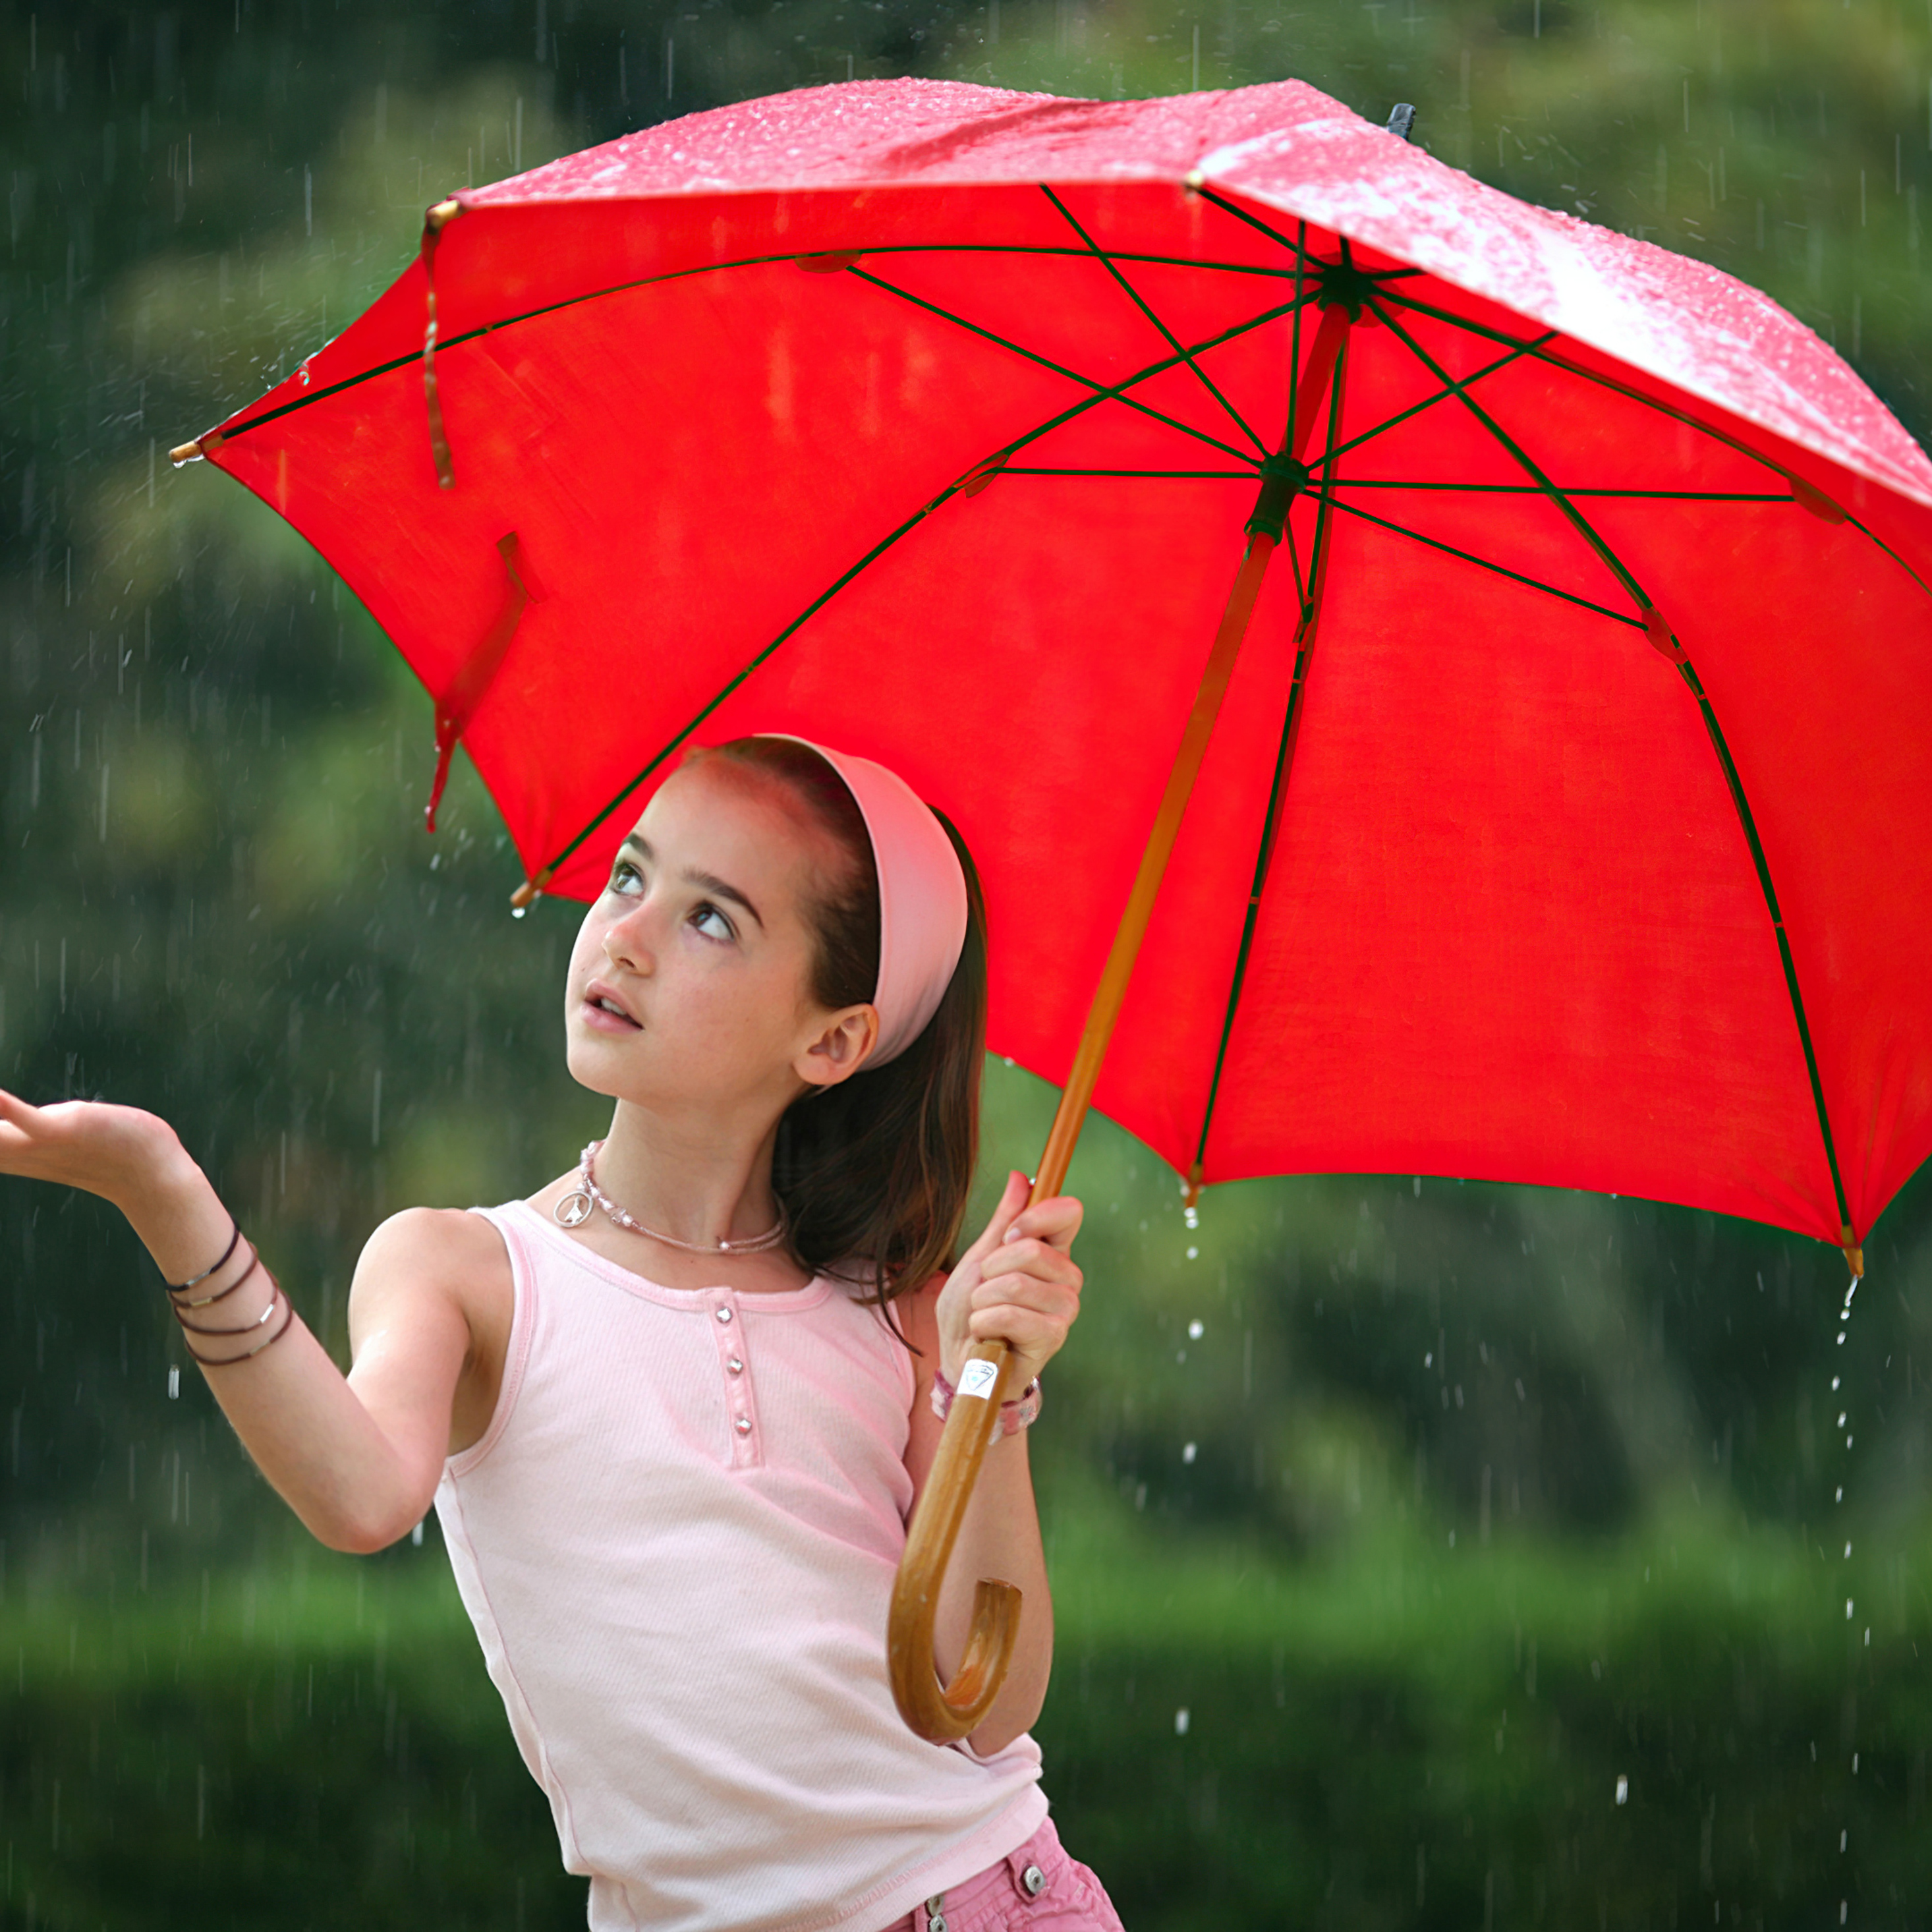 little-girl-in-rain-with-umbrella-4k-iv.jpg